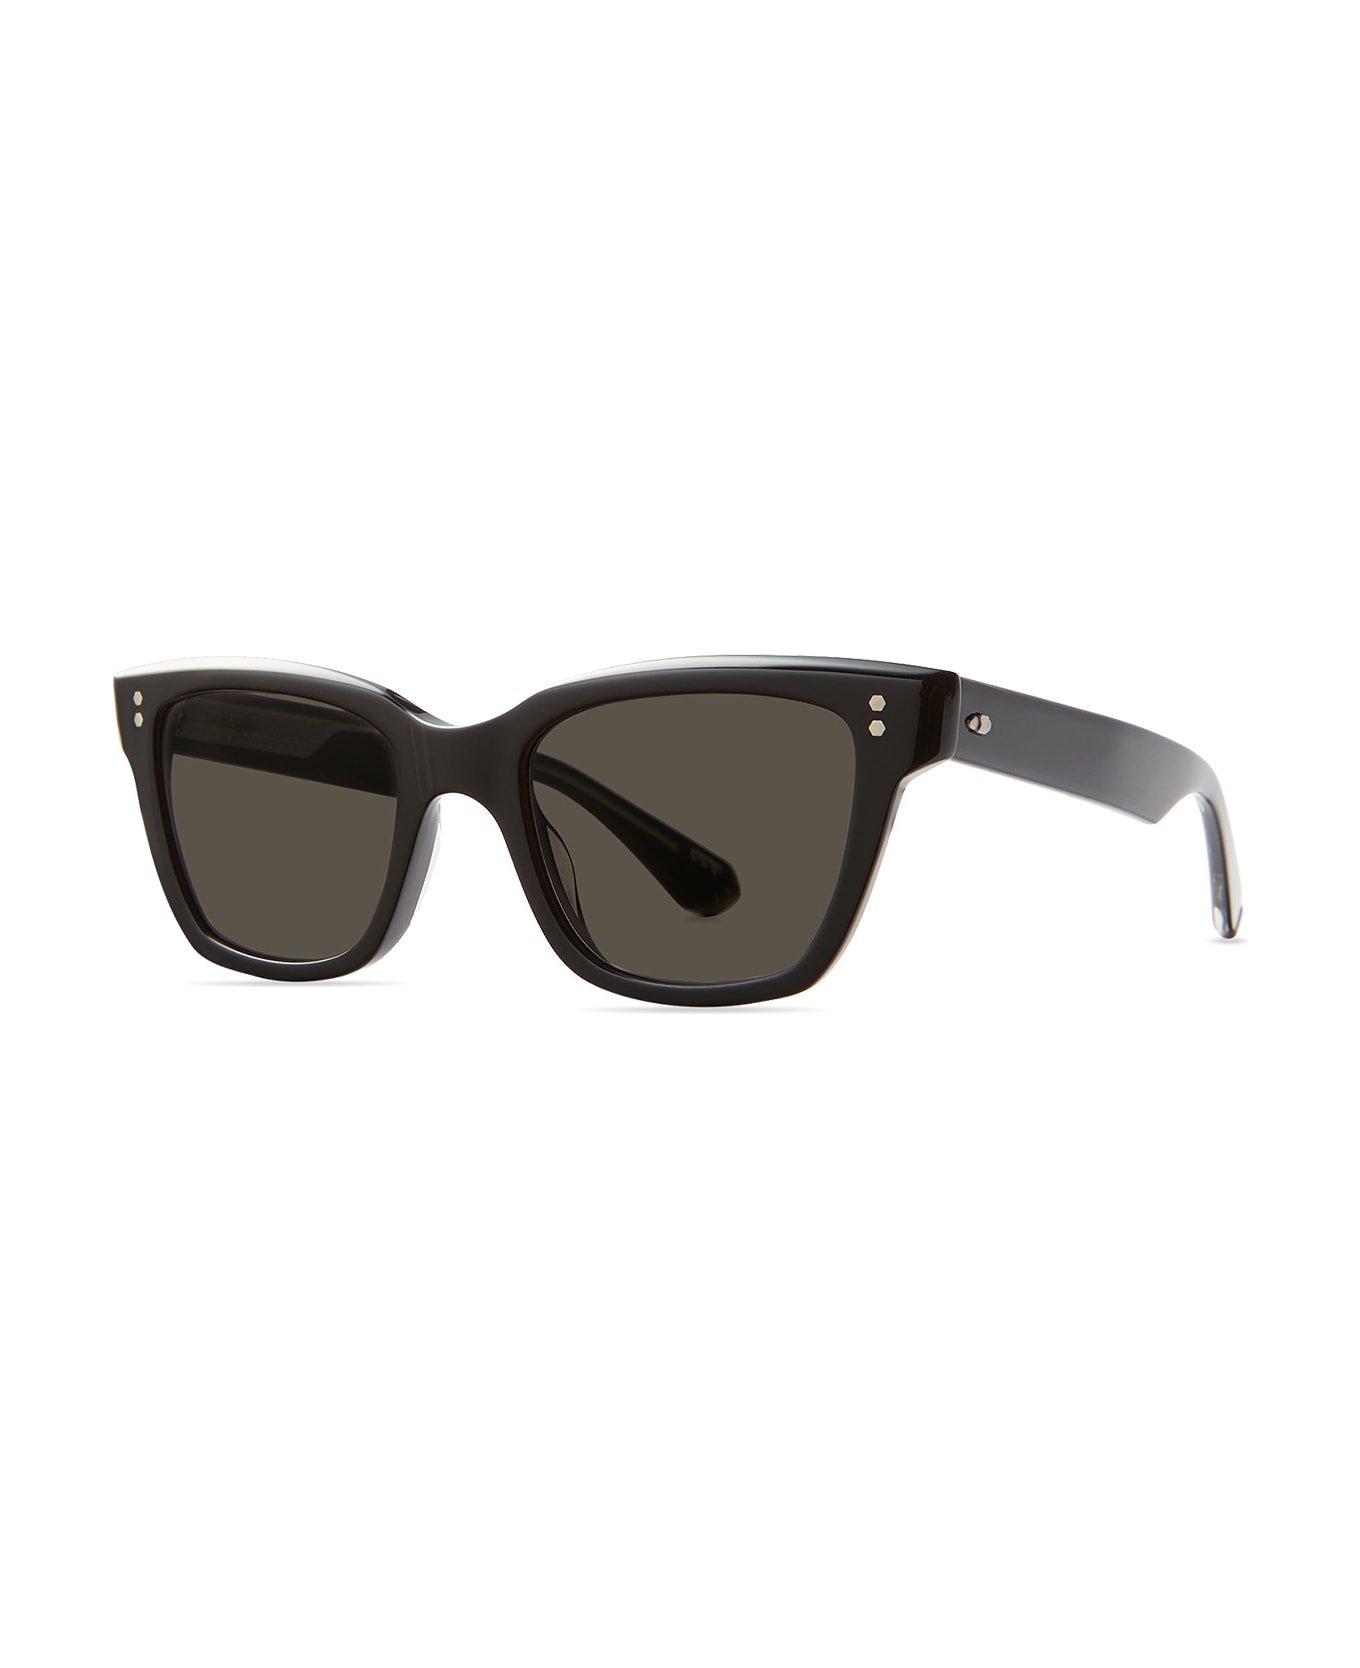 Mr. Leight Lola S Black-platinum Sunglasses - Black-Platinum サングラス